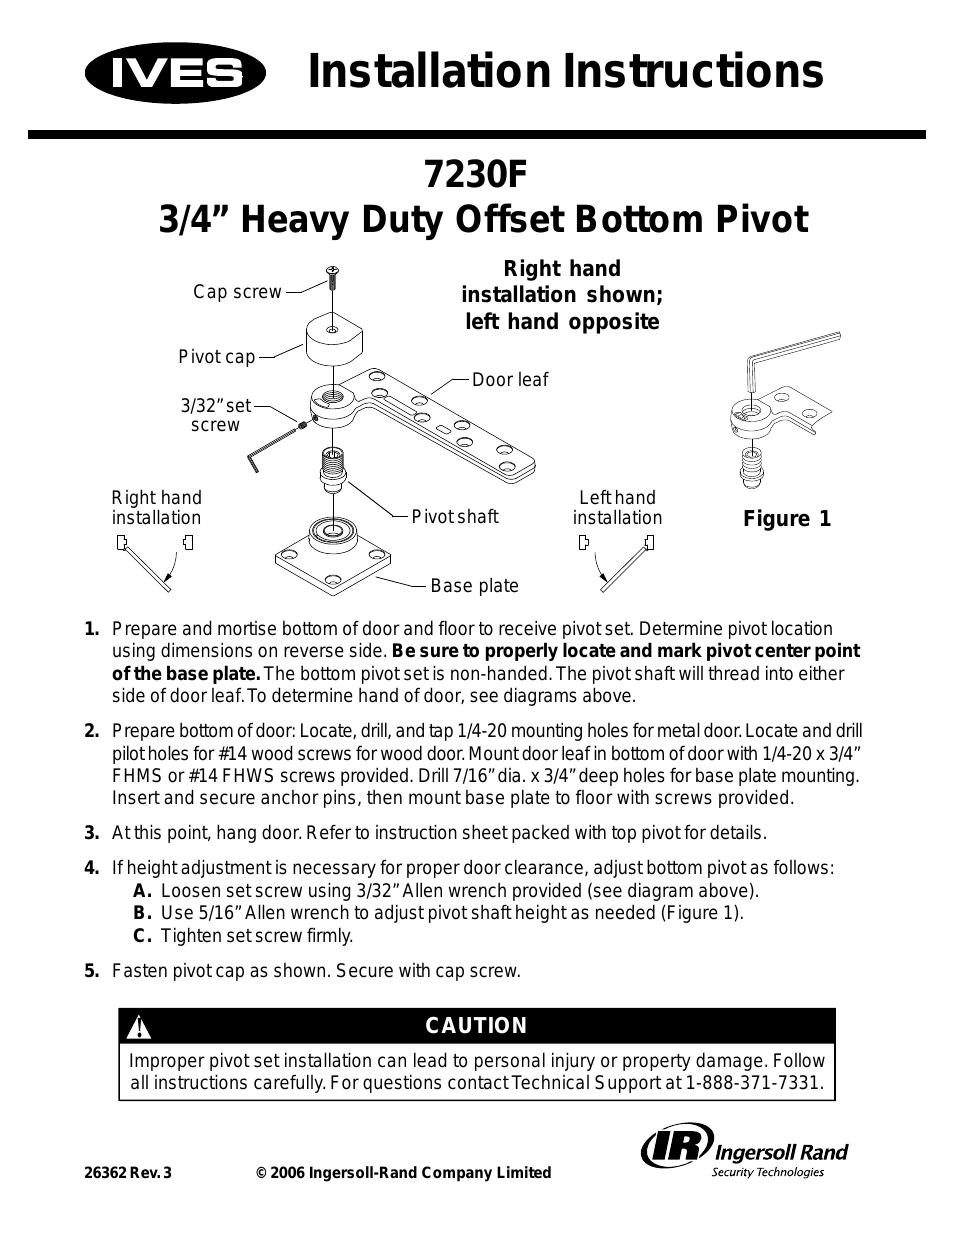 Heavy Duty Offset Top Pivot 7230F